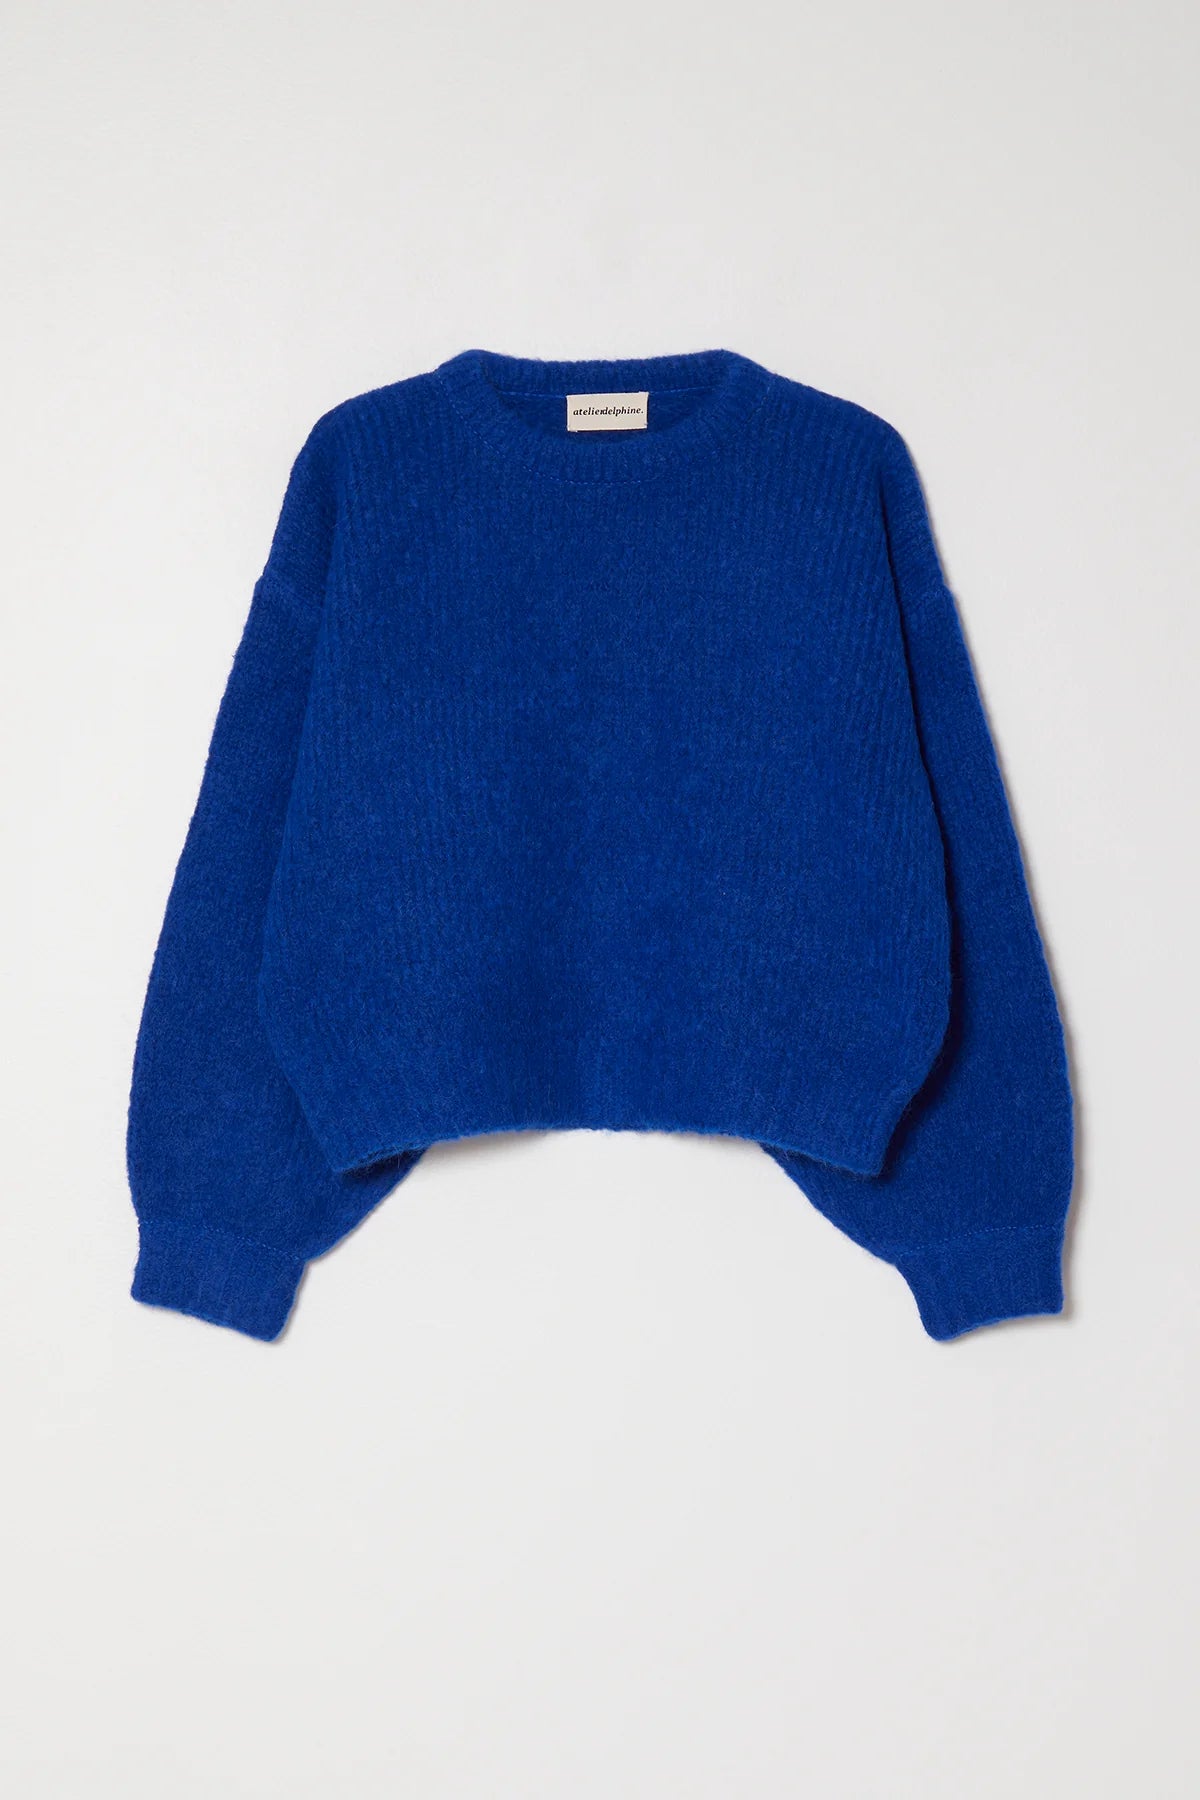 Balloon Sleeve Sweater in Baby Alpaca, Blue